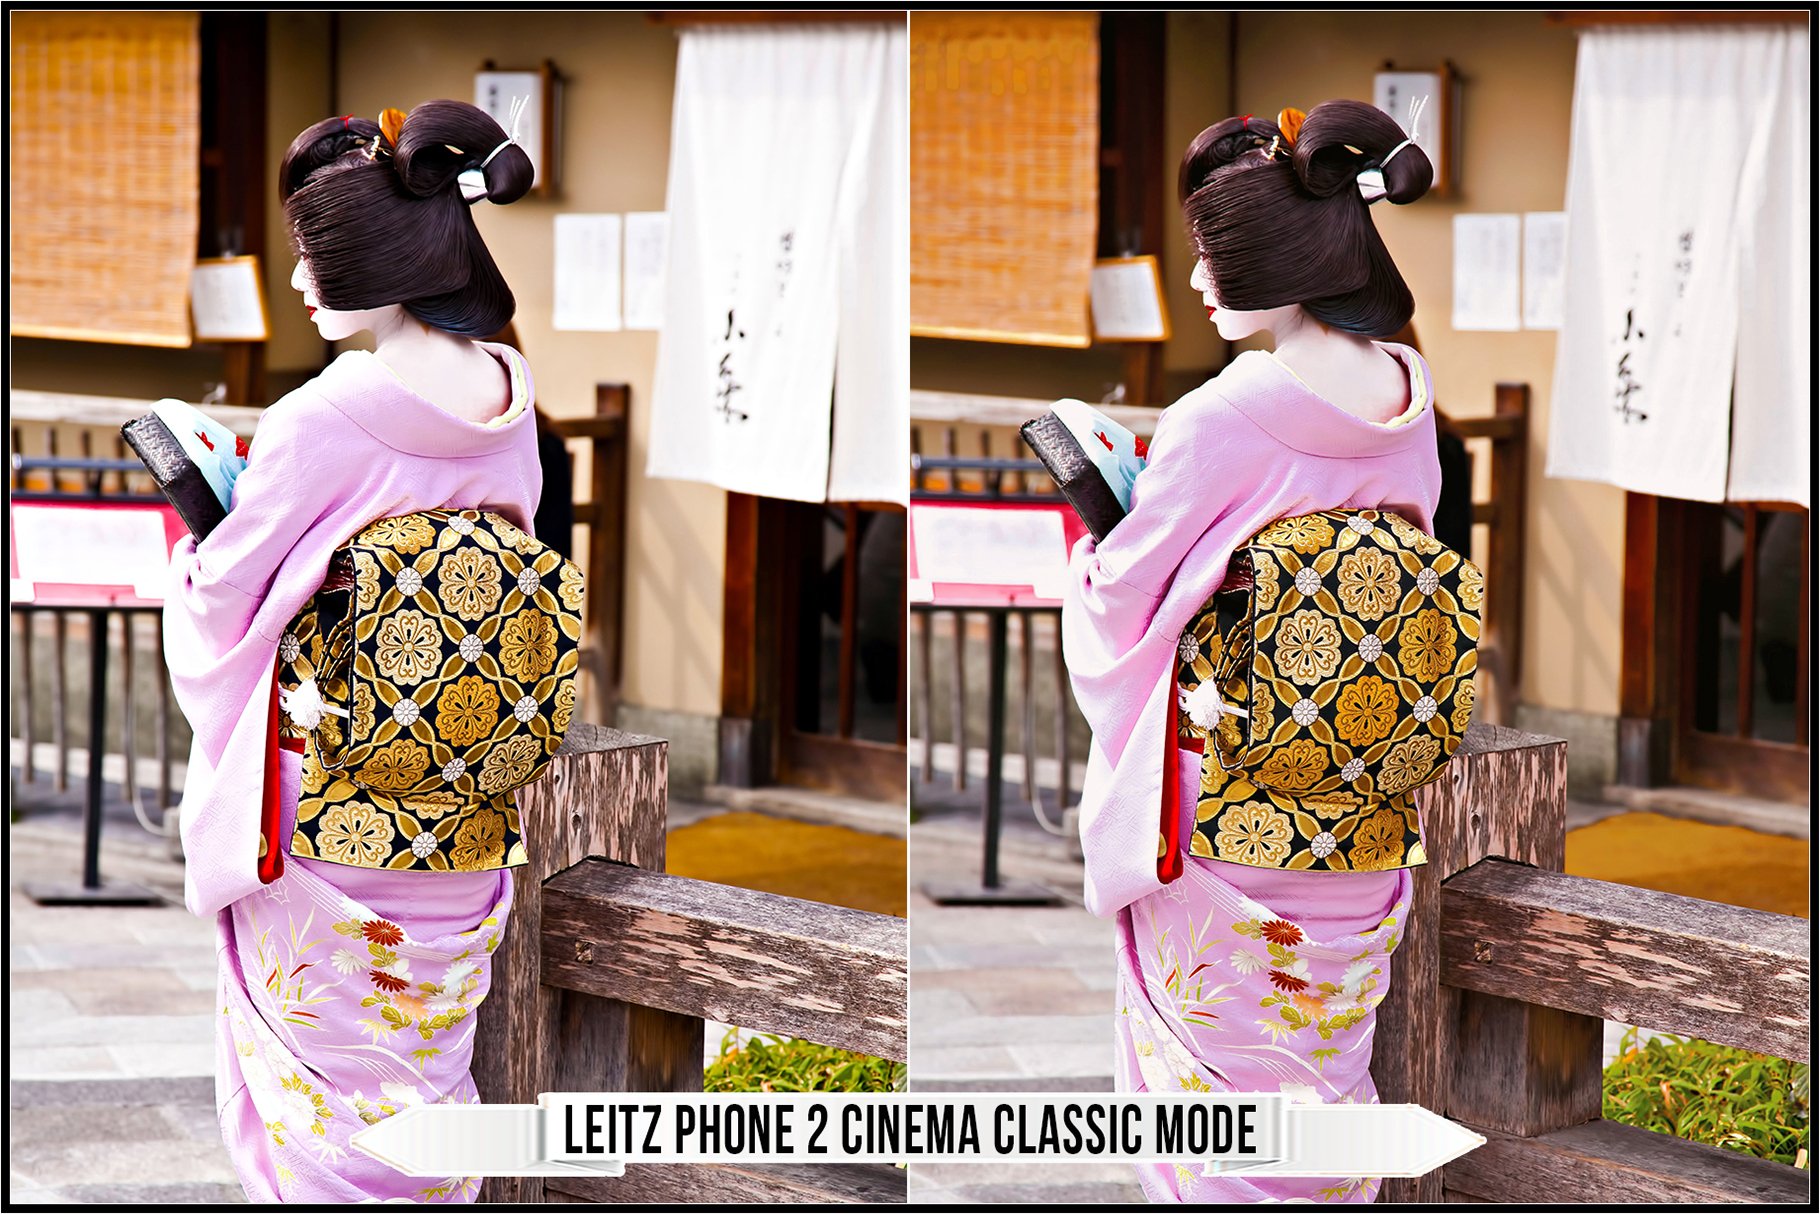 leitz phone 2 cinema classic mode 654